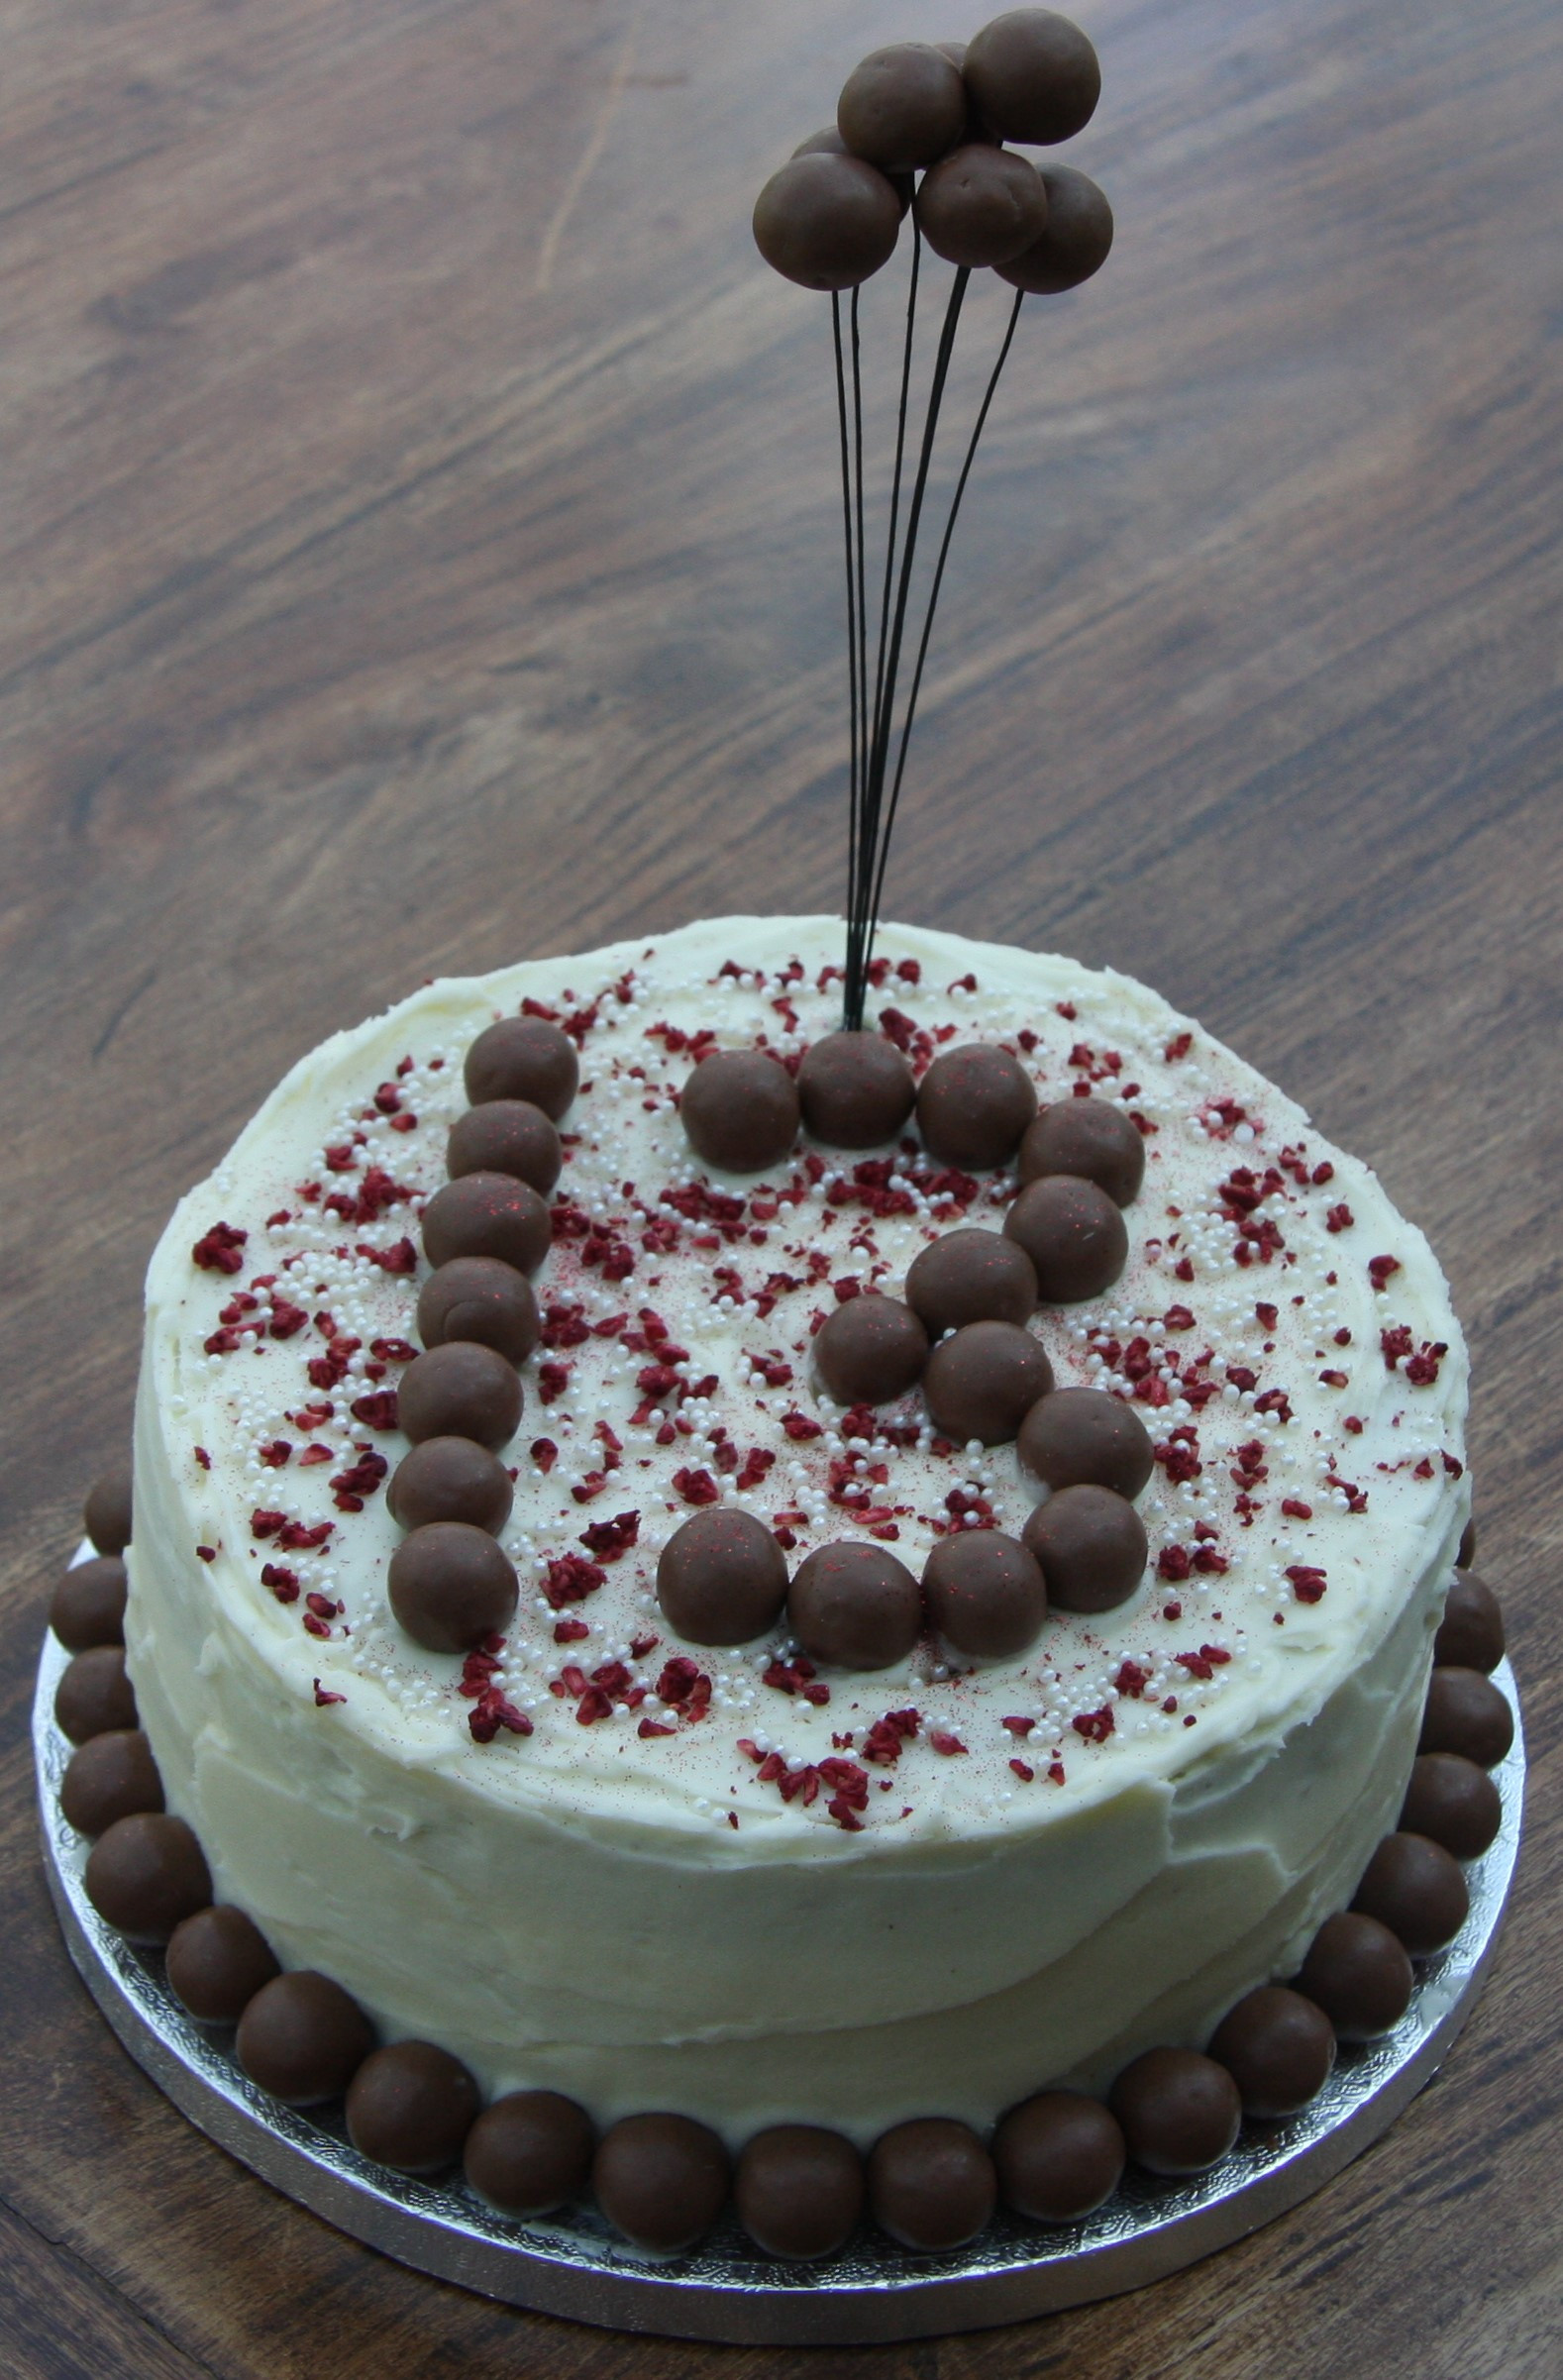 Pictures Of Birthday Cakes
 More Birthday Cake Ideas – lovinghomemade